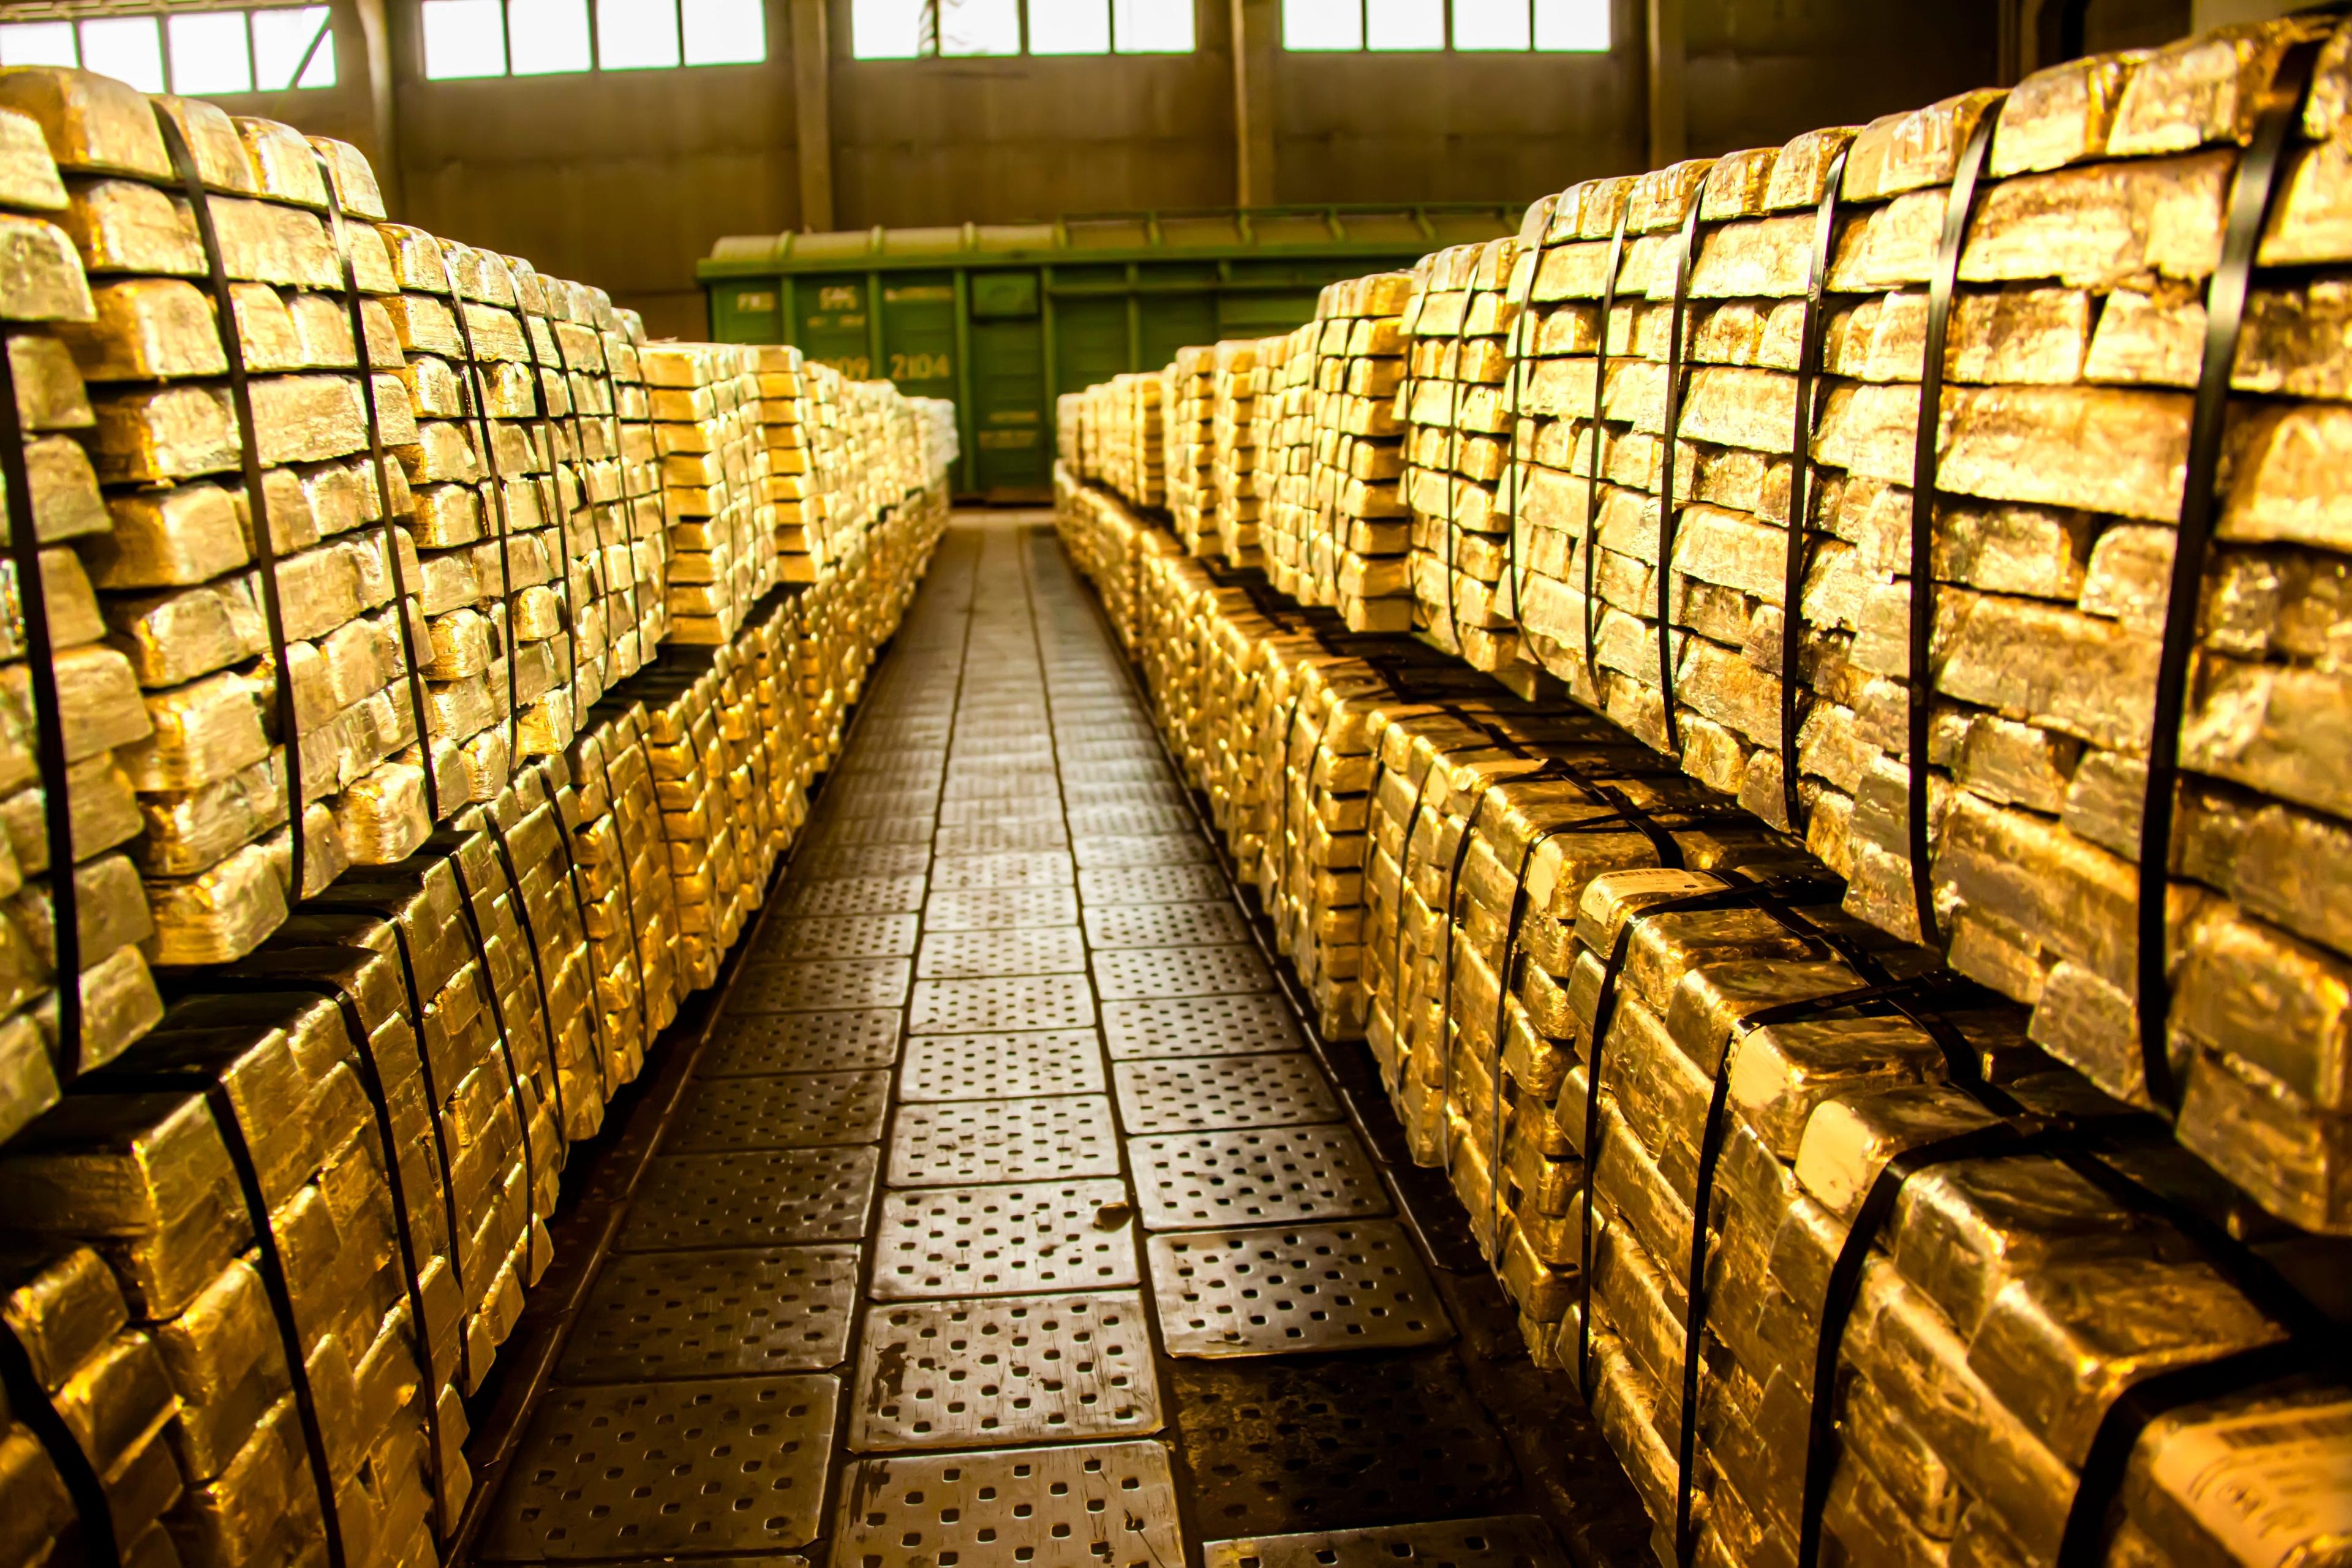 In March, Uzbekistan exported gold worth $1.35 billion